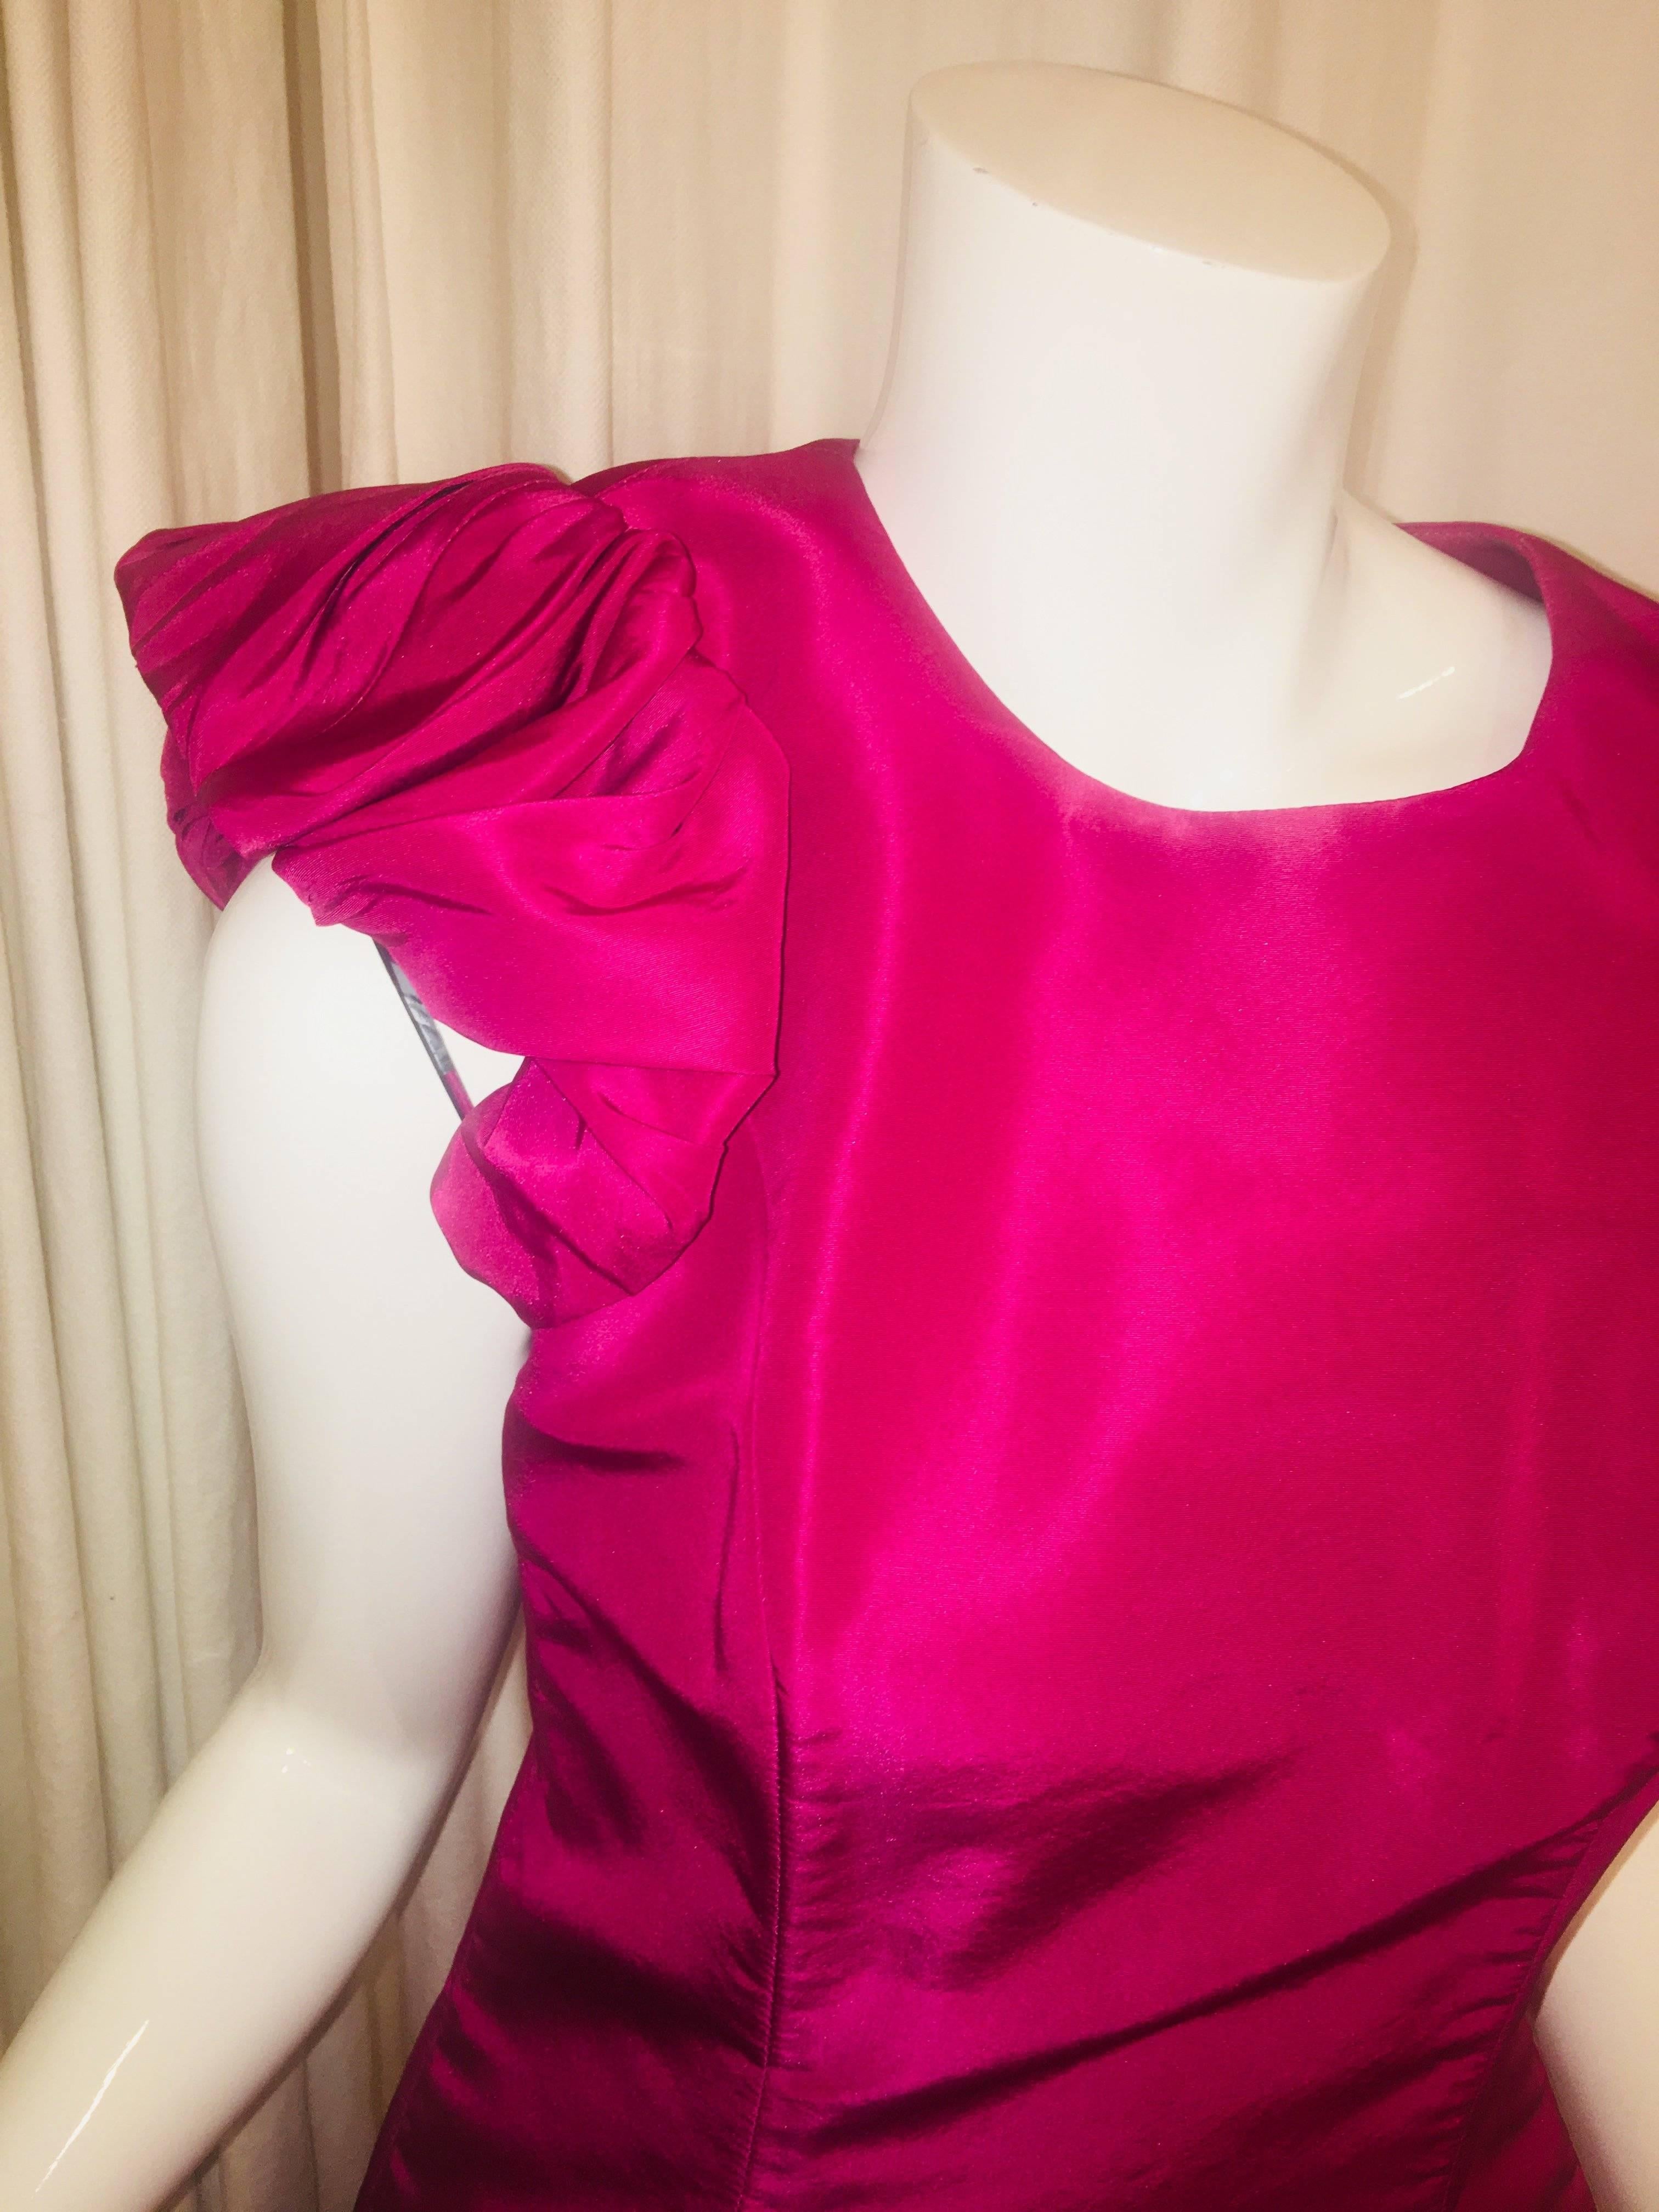 Caroline Herrera Silk Sheath Style Dress with Short Ruffle Sleeves
Retails for $1990